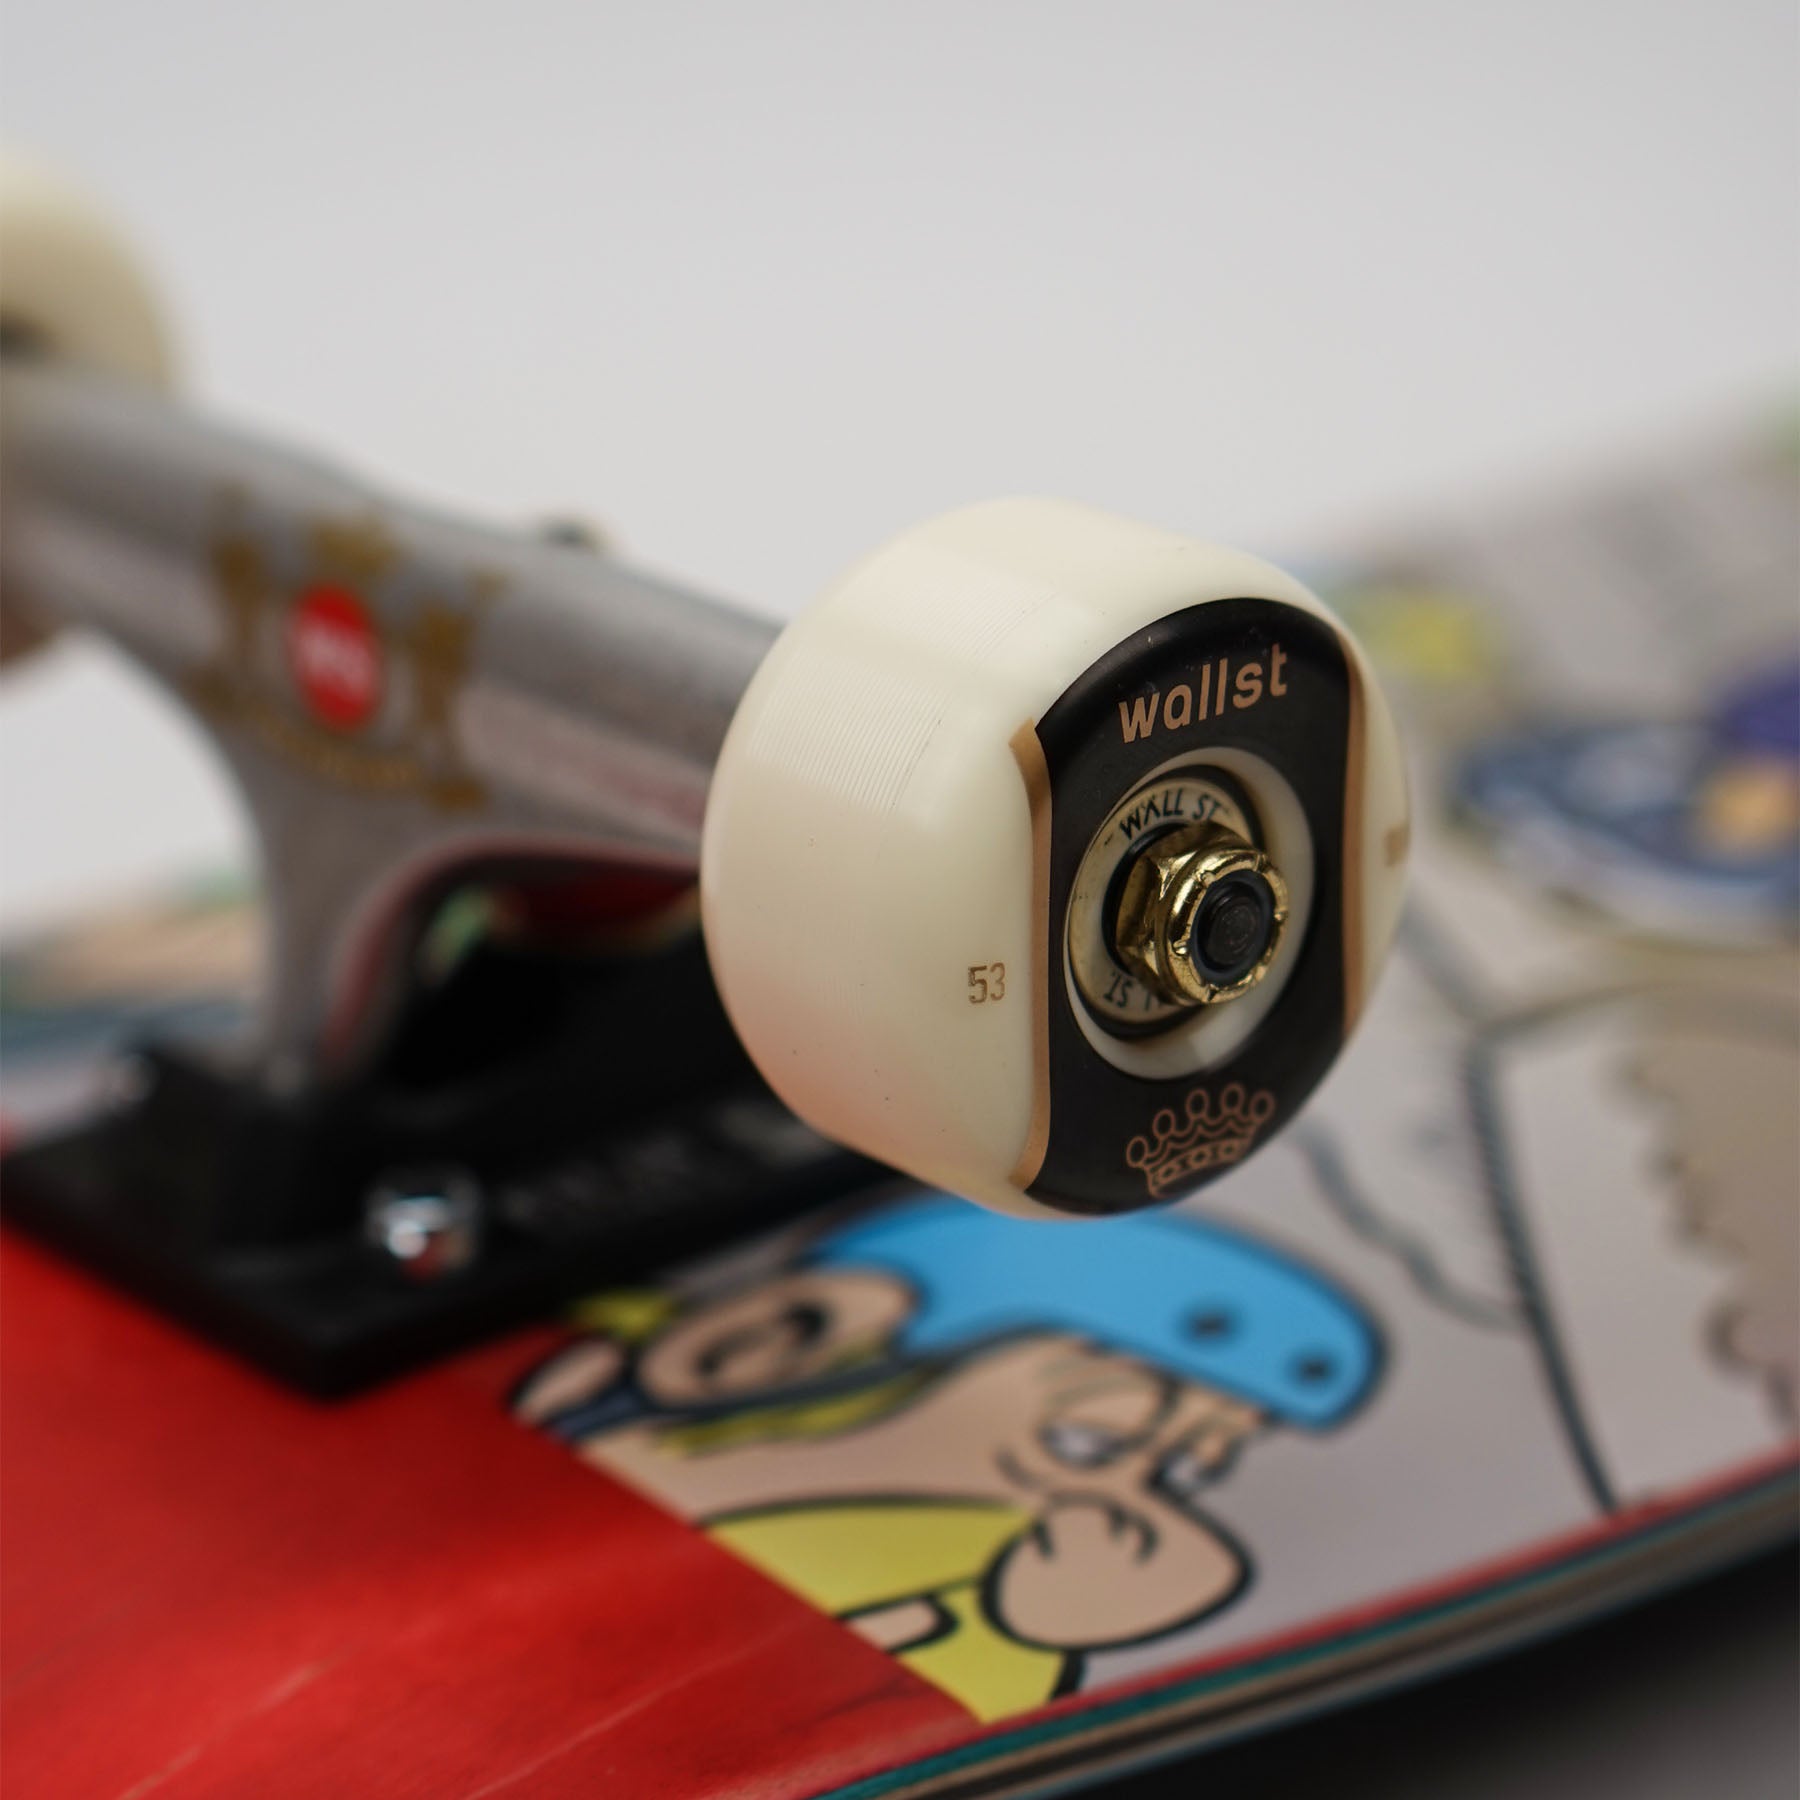 Wallstreet Skateboard Complet - Les Gaulois Venix Premium